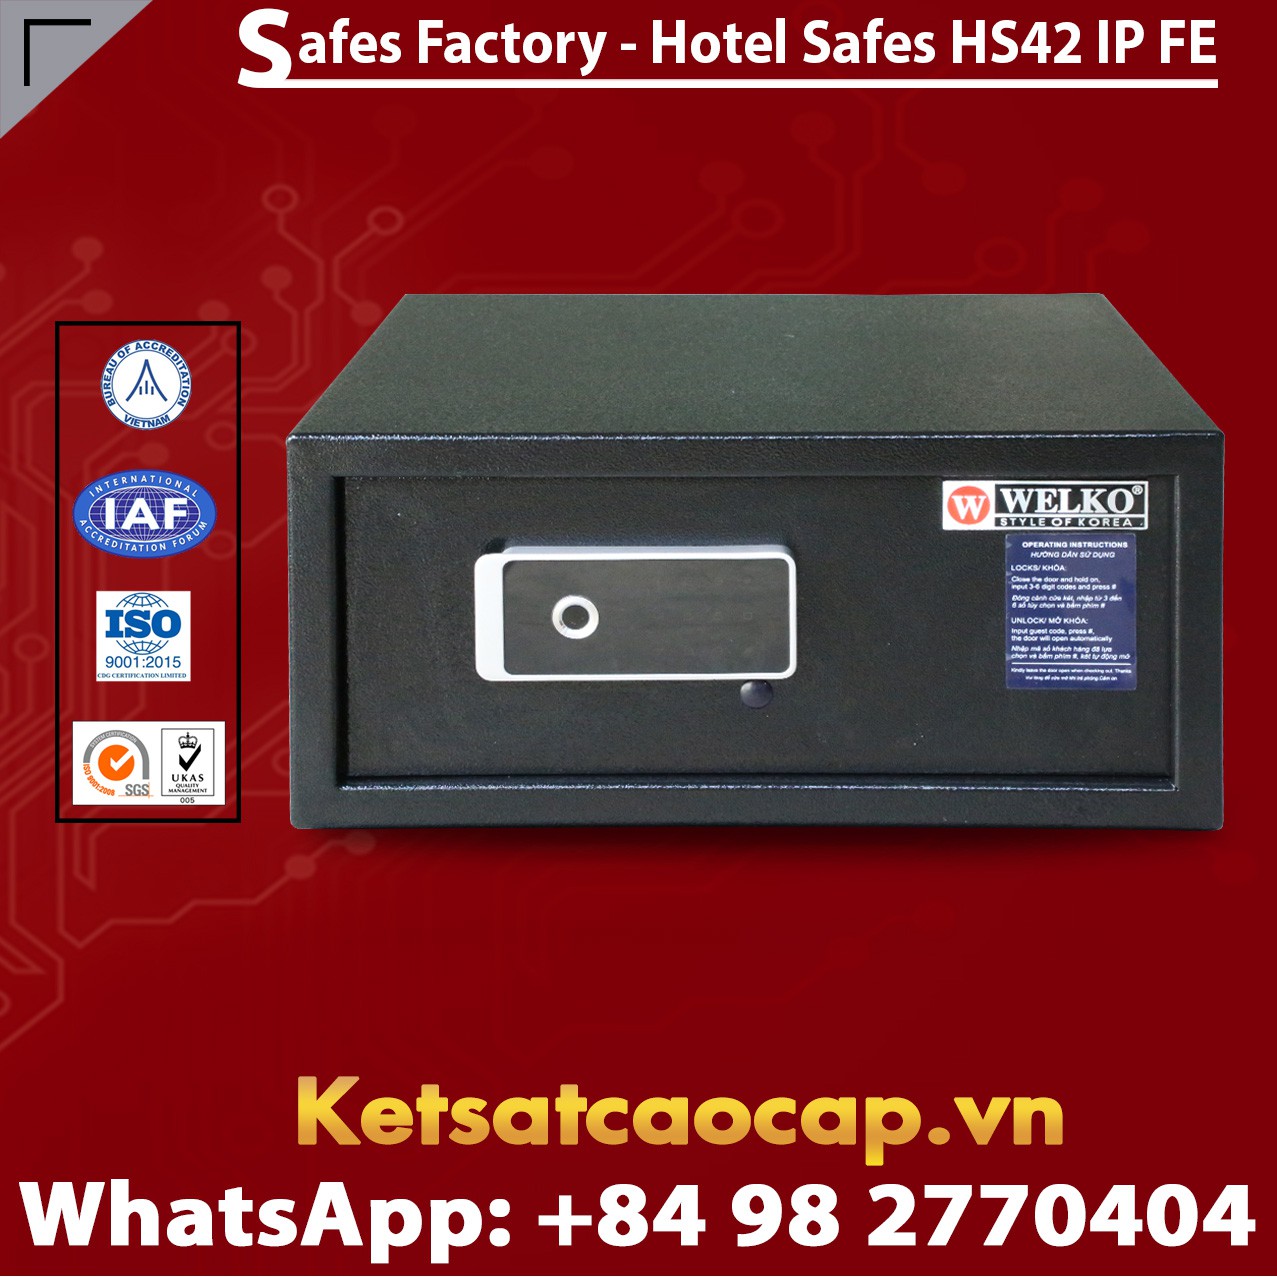 Safes in Hotel WELKO HS42 IP FE